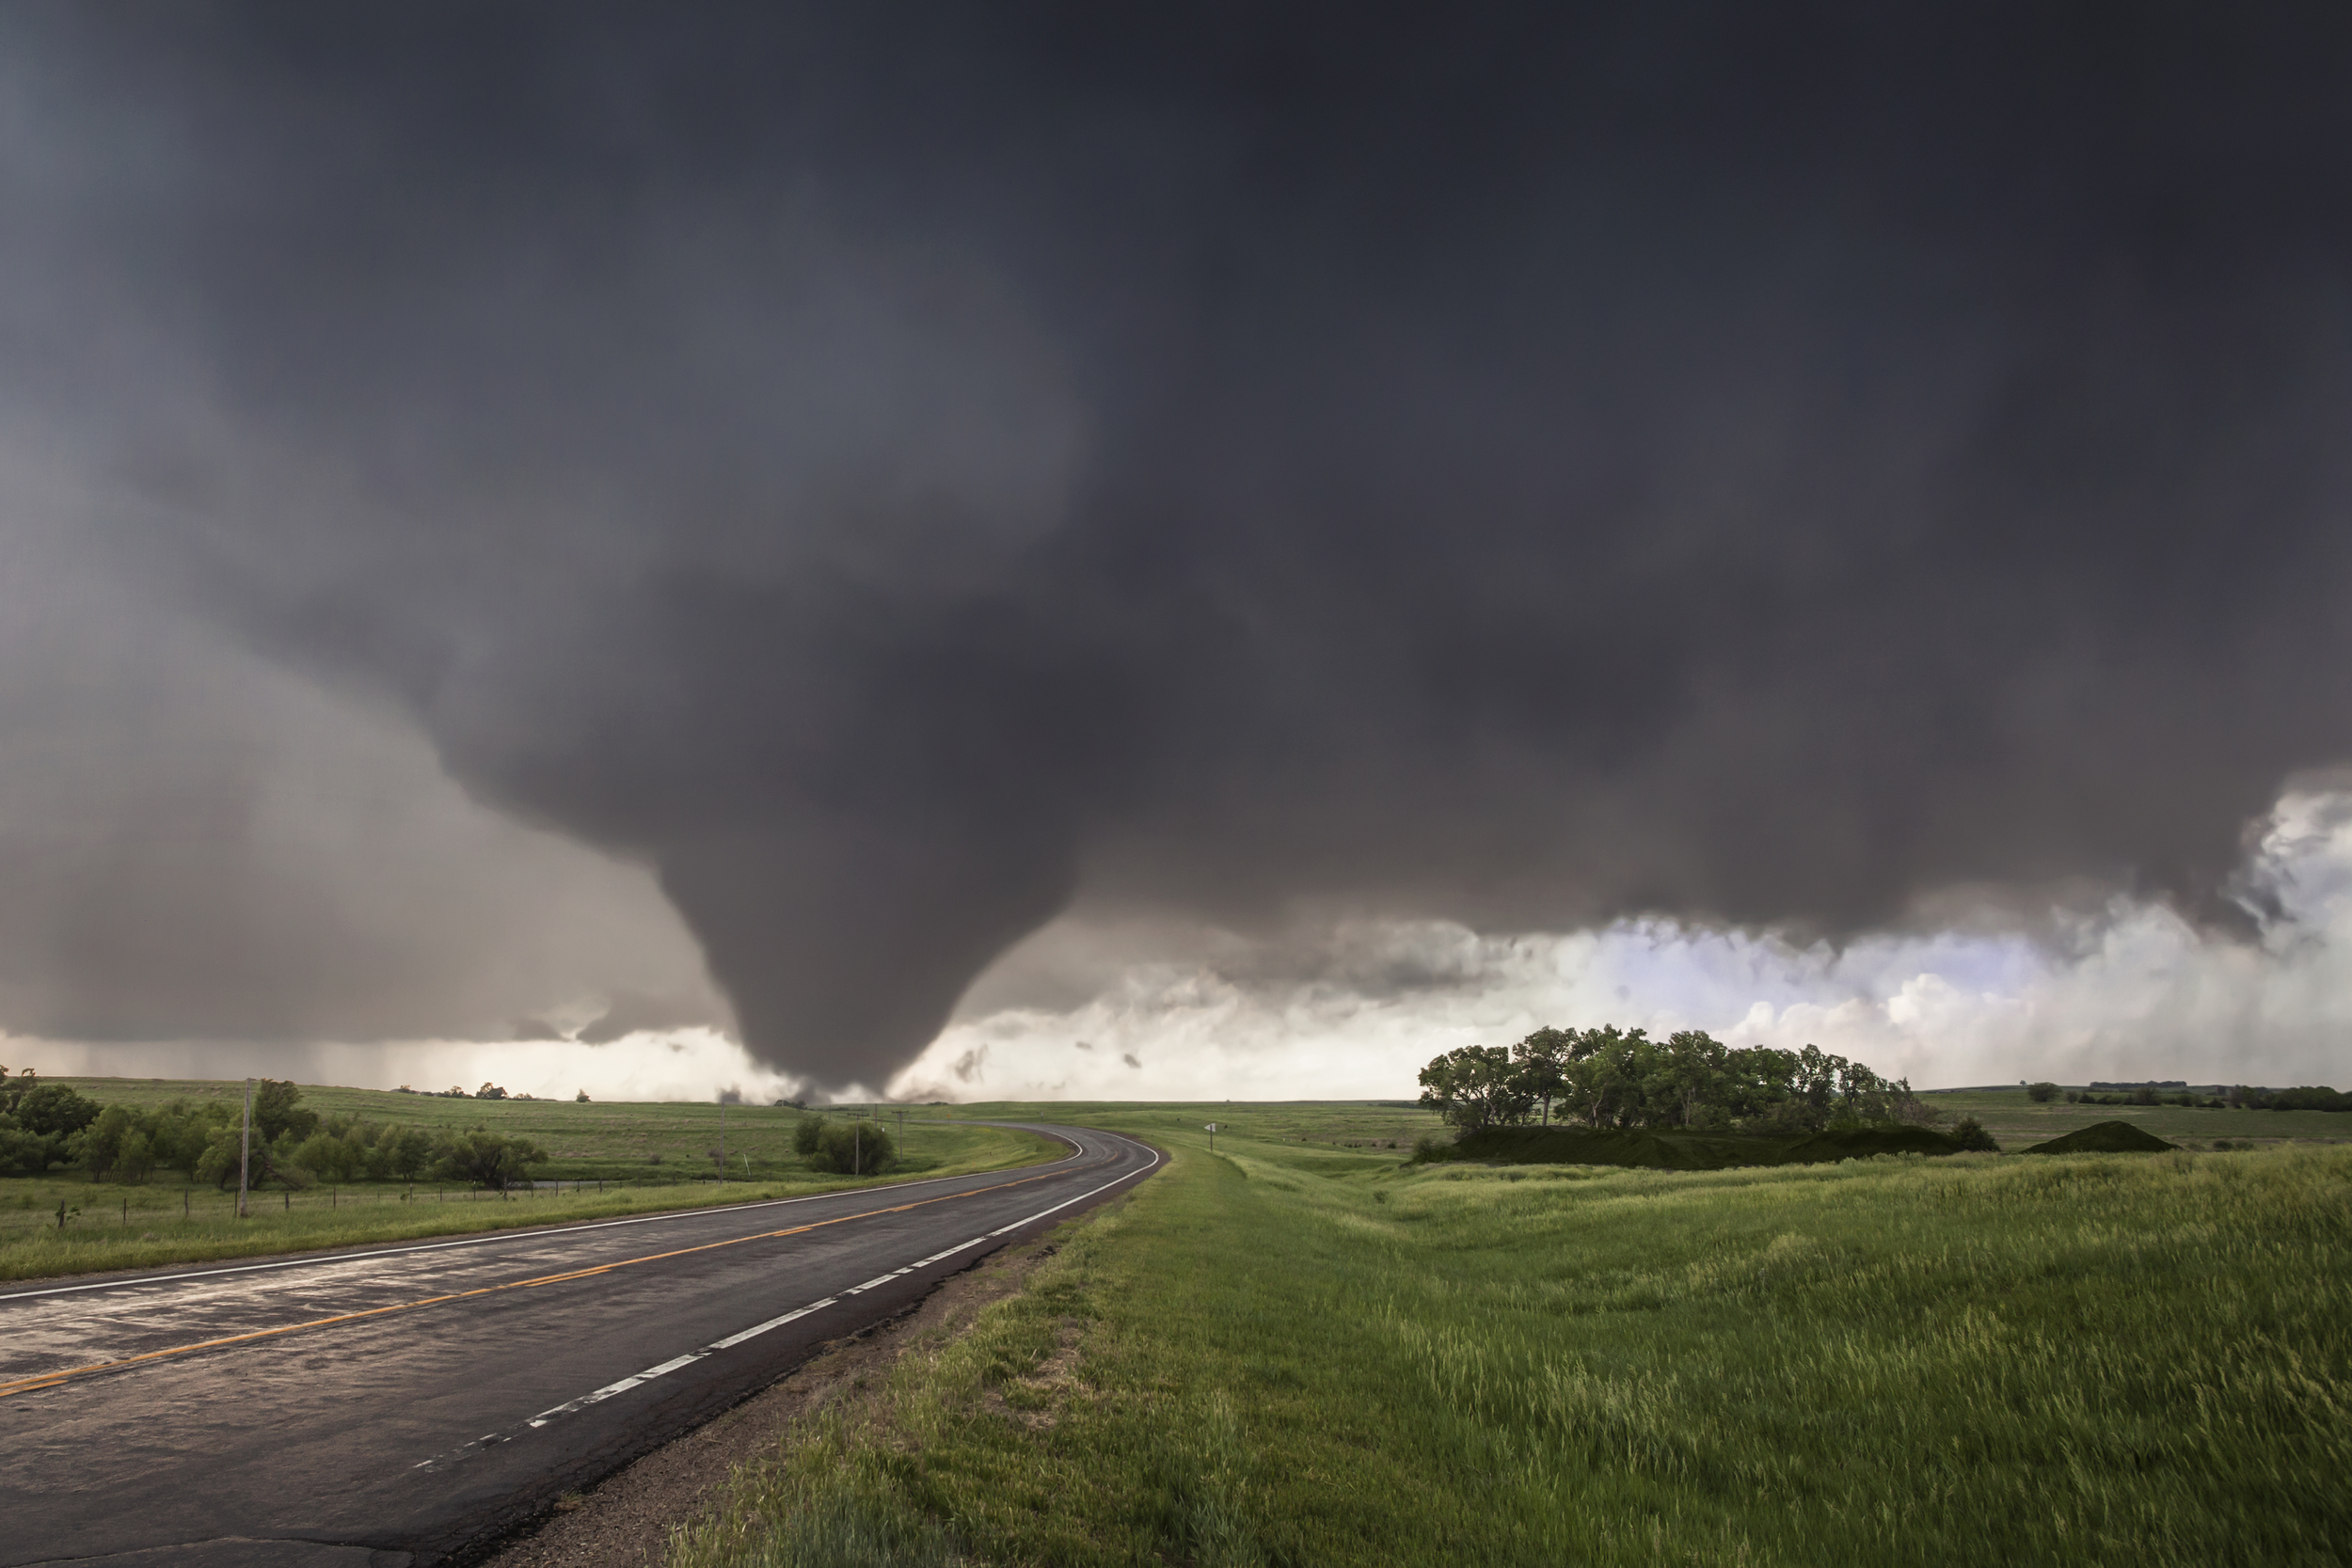  Tornado near Bennington, Kansas on May 28, 2013 